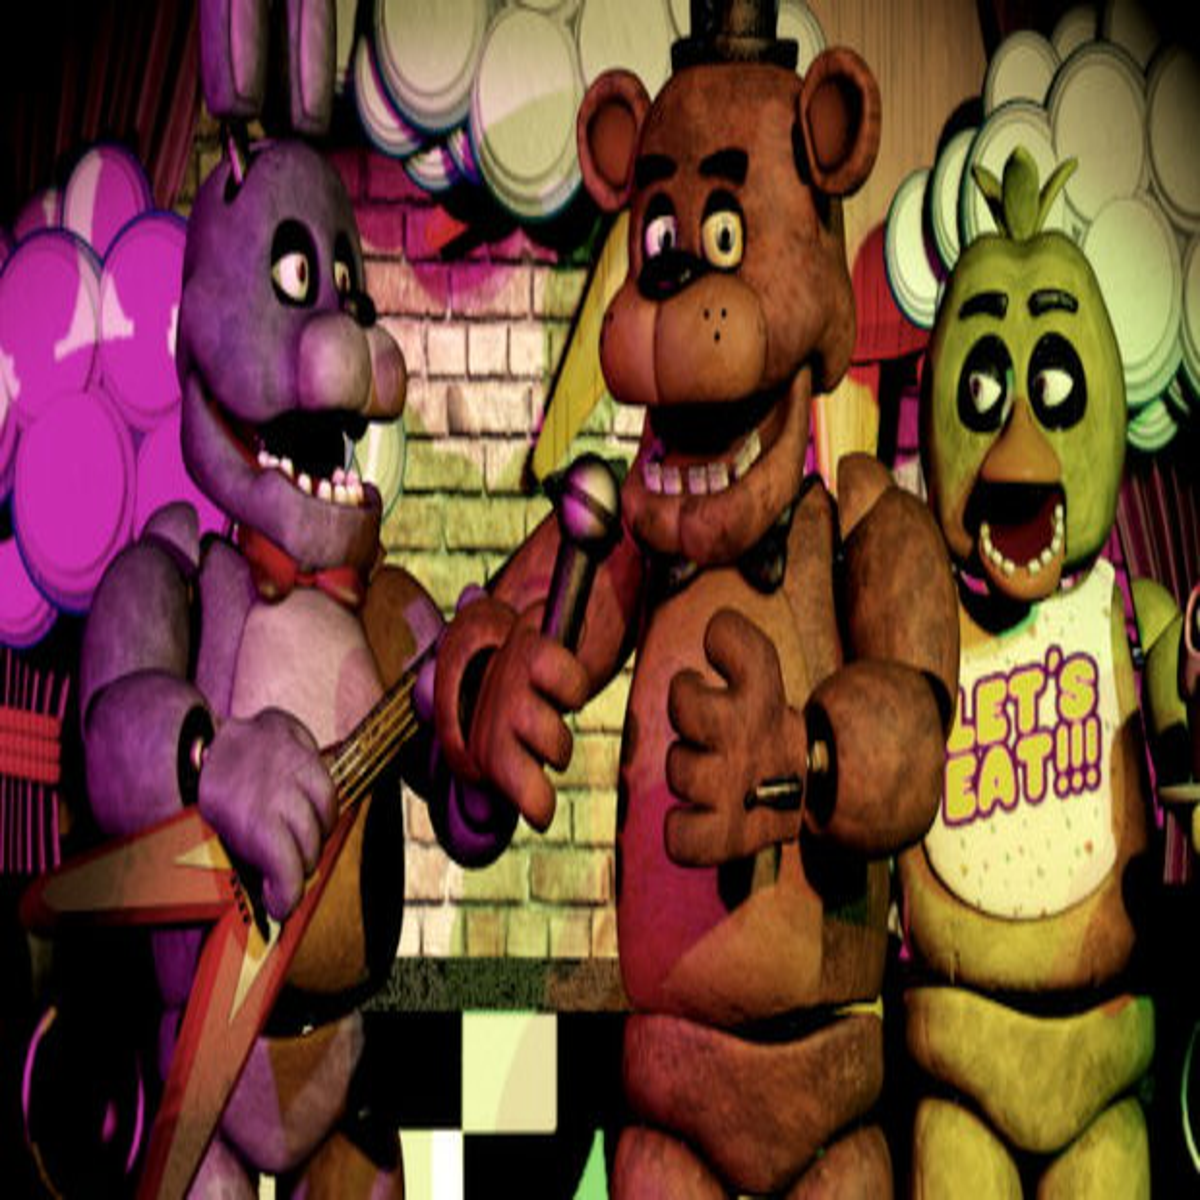 Five Nights At Freddy's: Killer In Purple Free Download - FNAF Fan Games